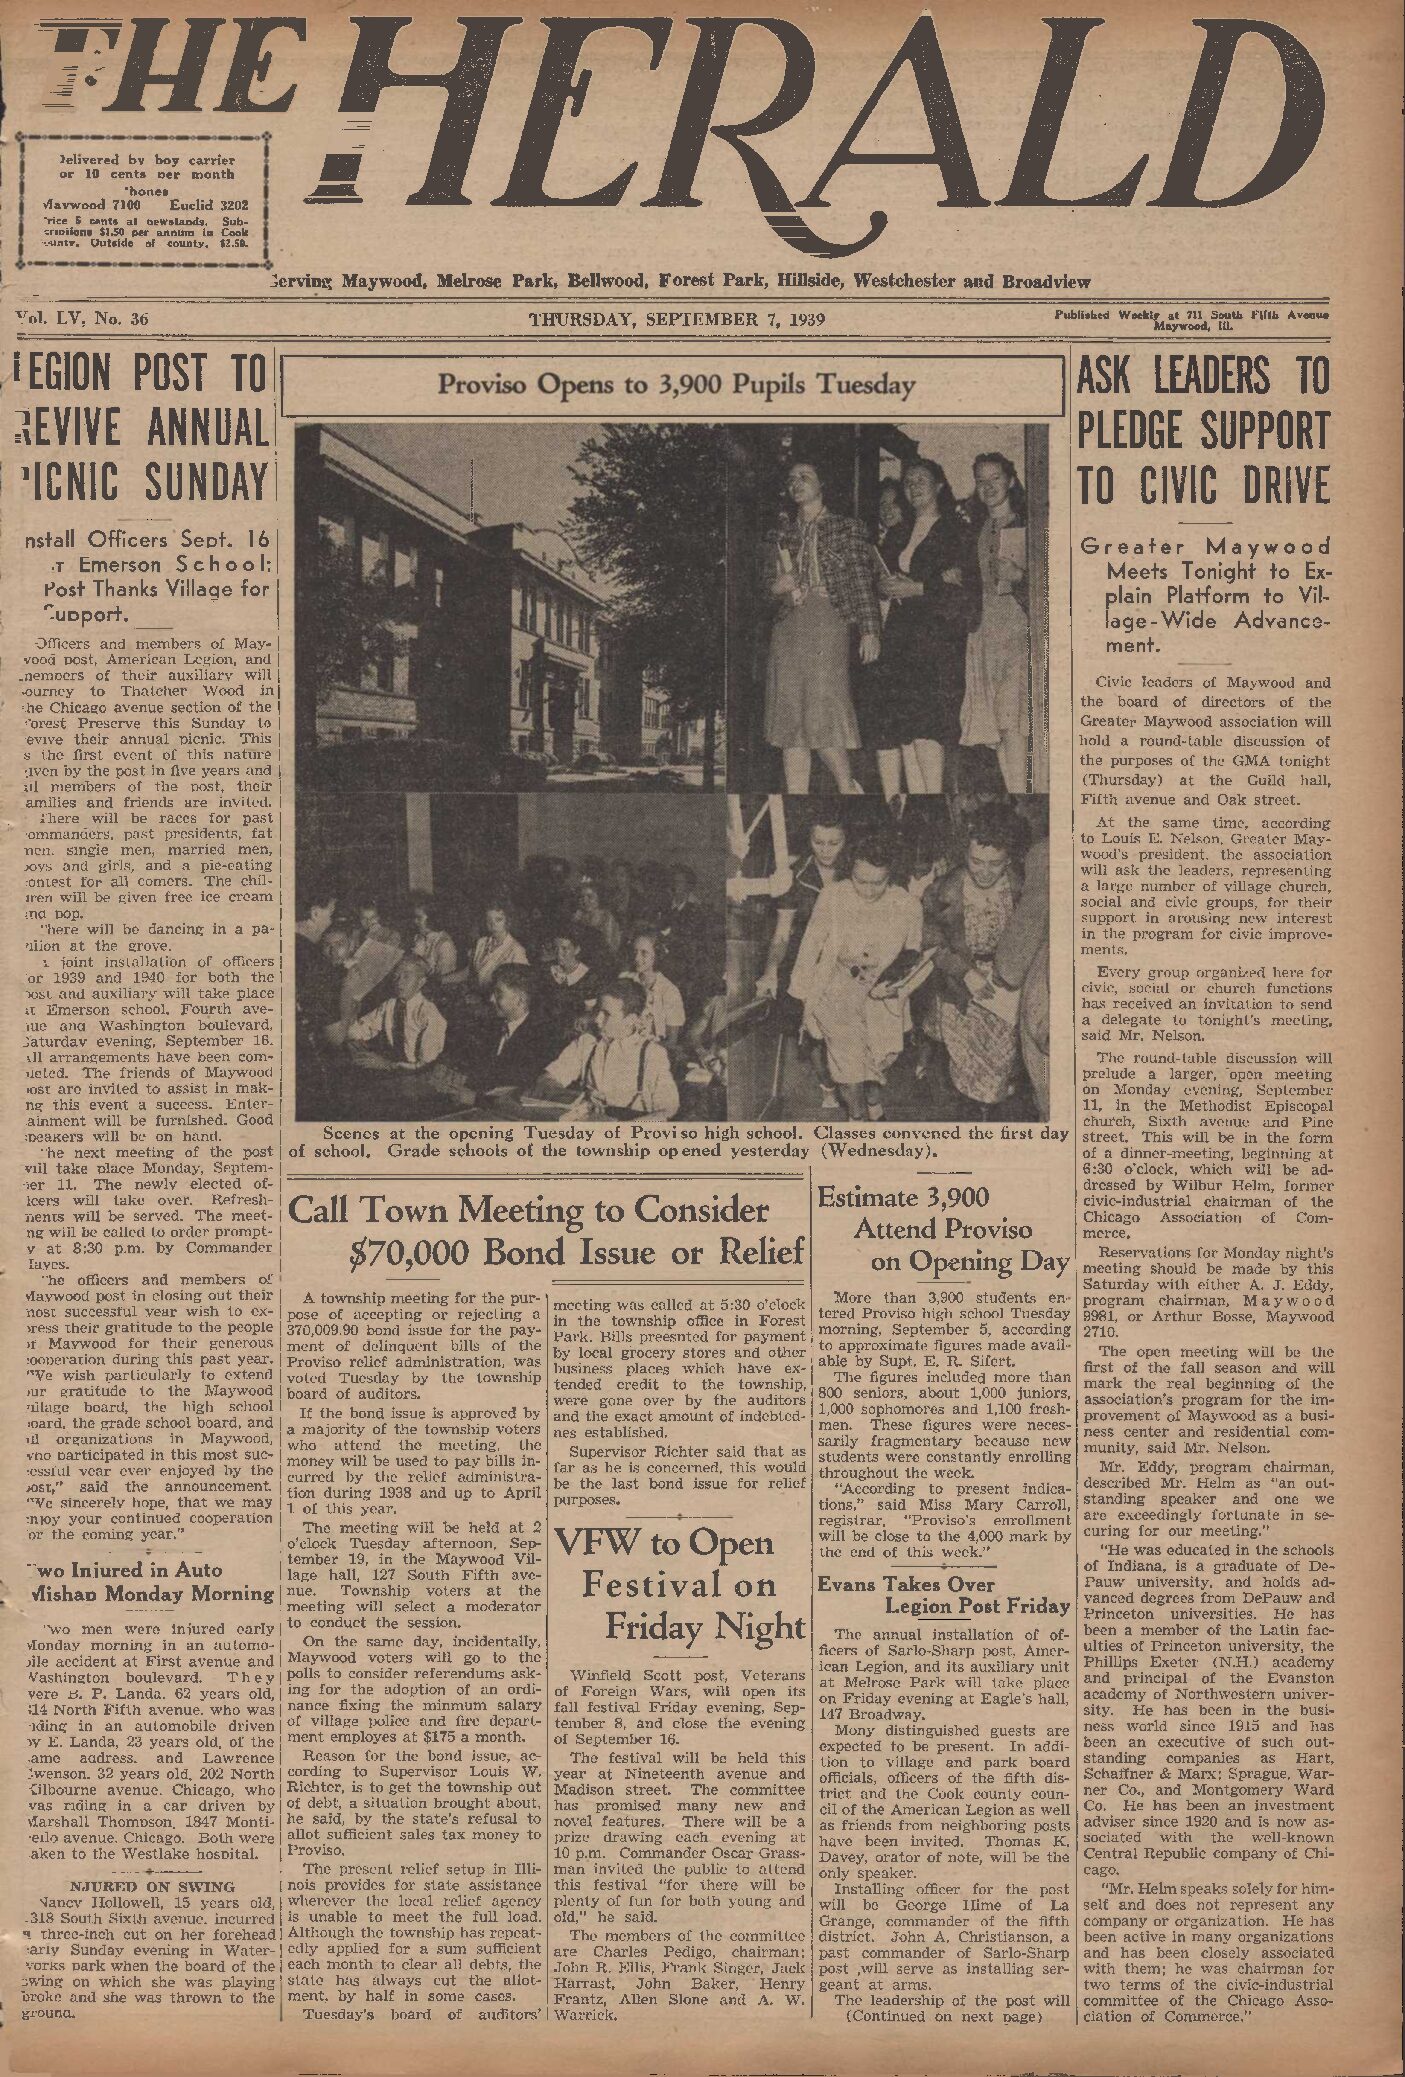 The Herald – 19390907